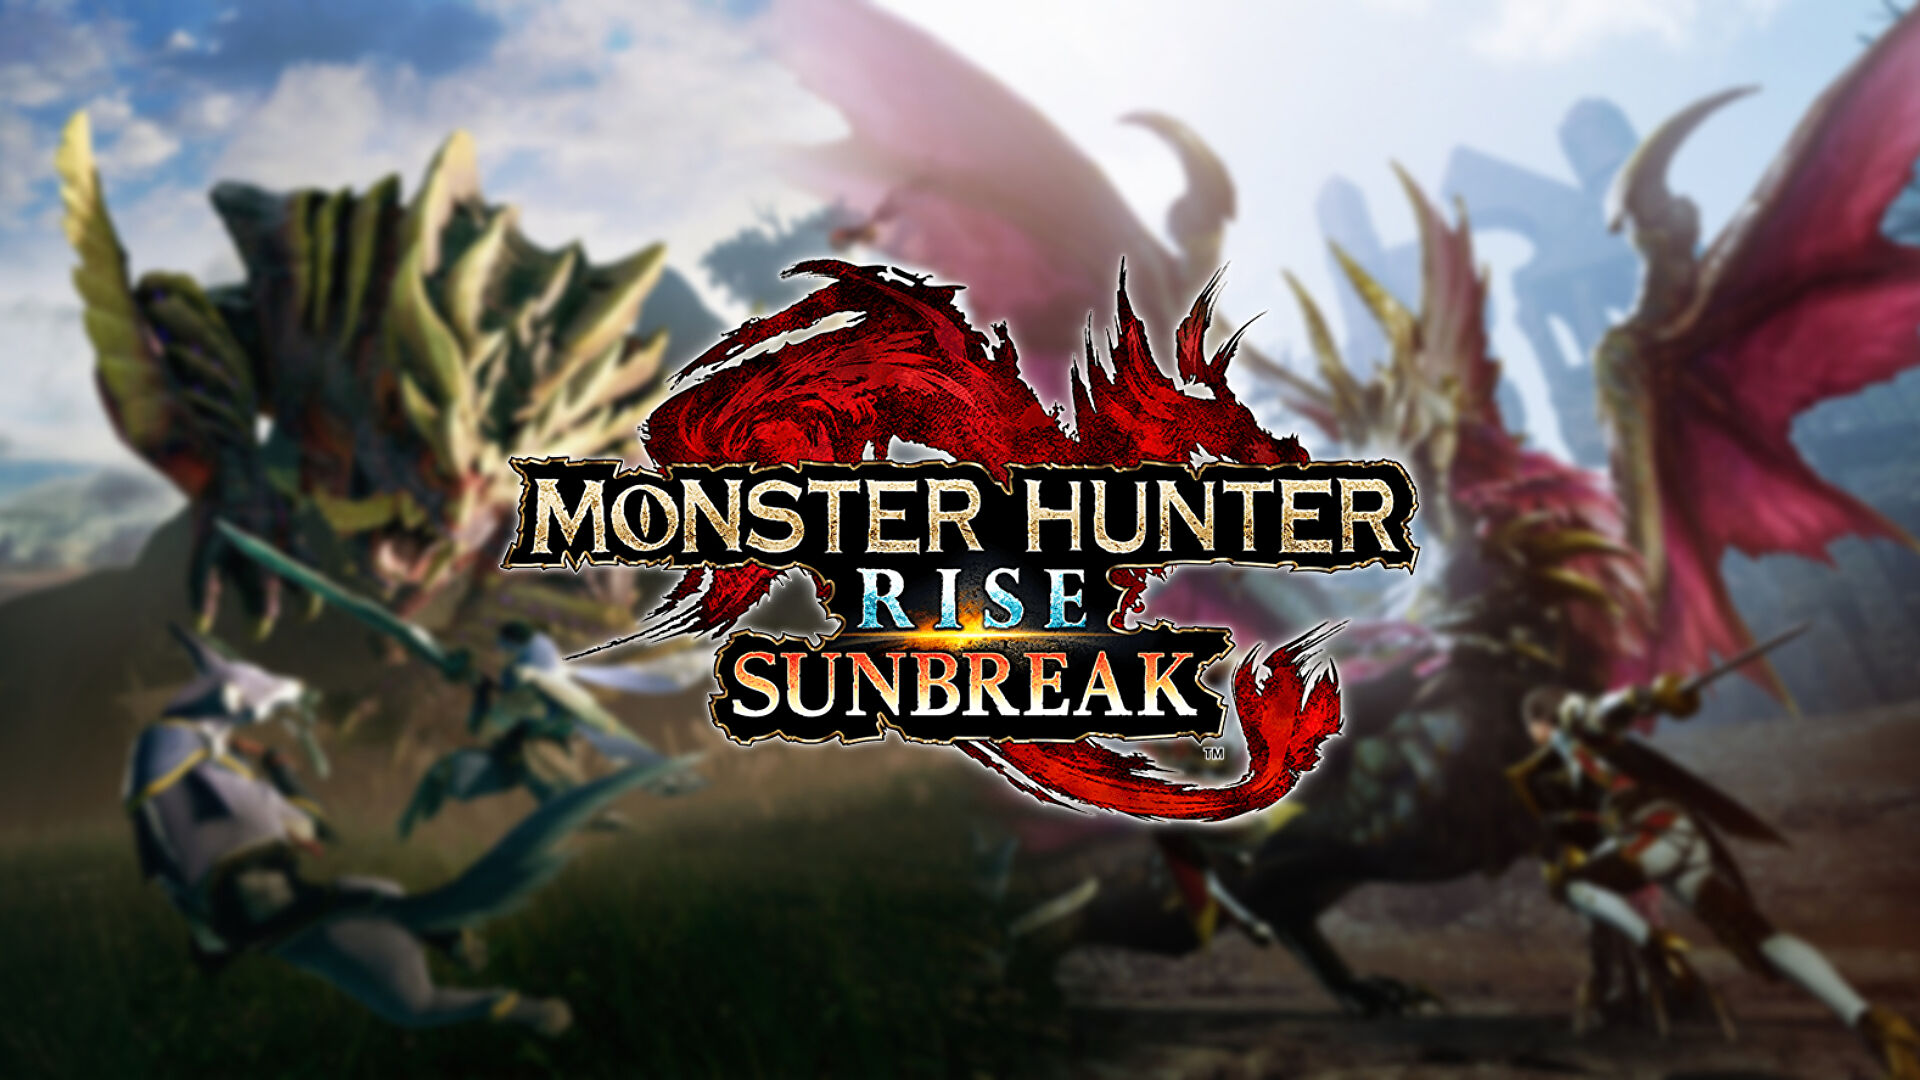 Review: 'Monster Hunter Rise: Sunbreak' a major improvement